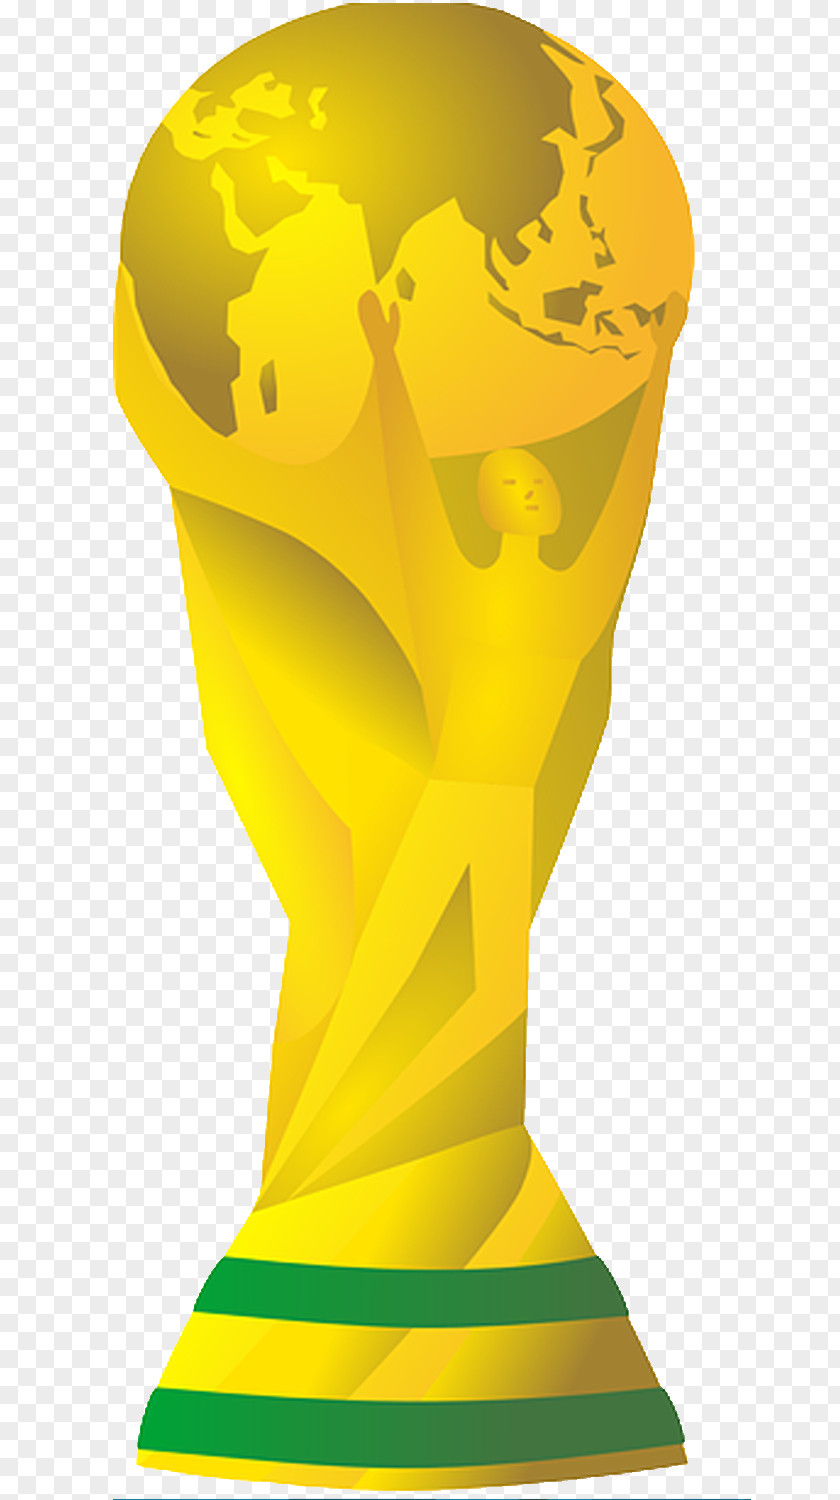 Football 2018 World Cup 2014 FIFA Trophy Clip Art PNG